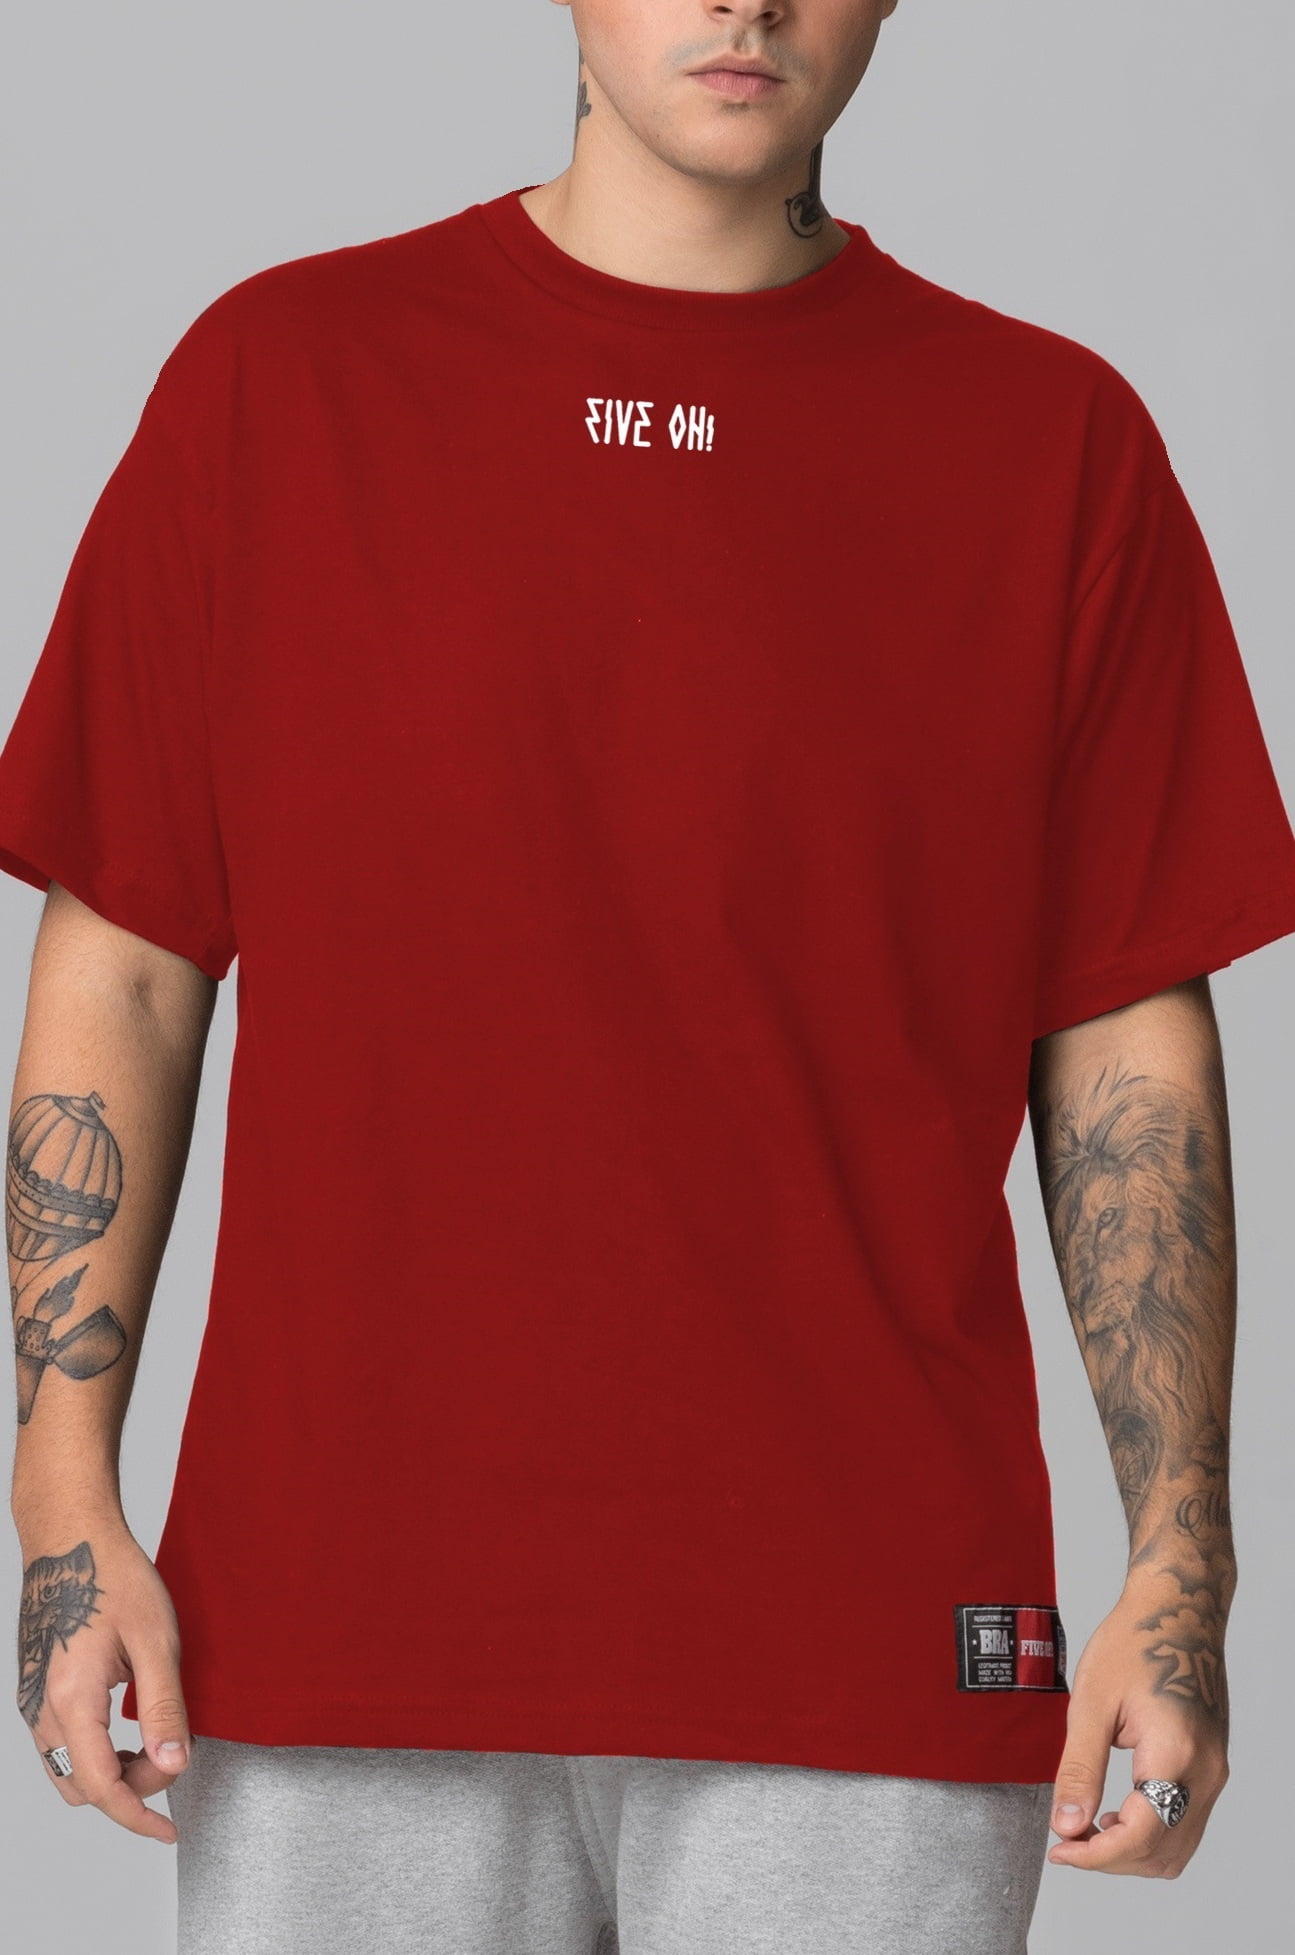 Camiseta Oversized Masculina FIve Oh FV2022020 - Five Oh Streetwear